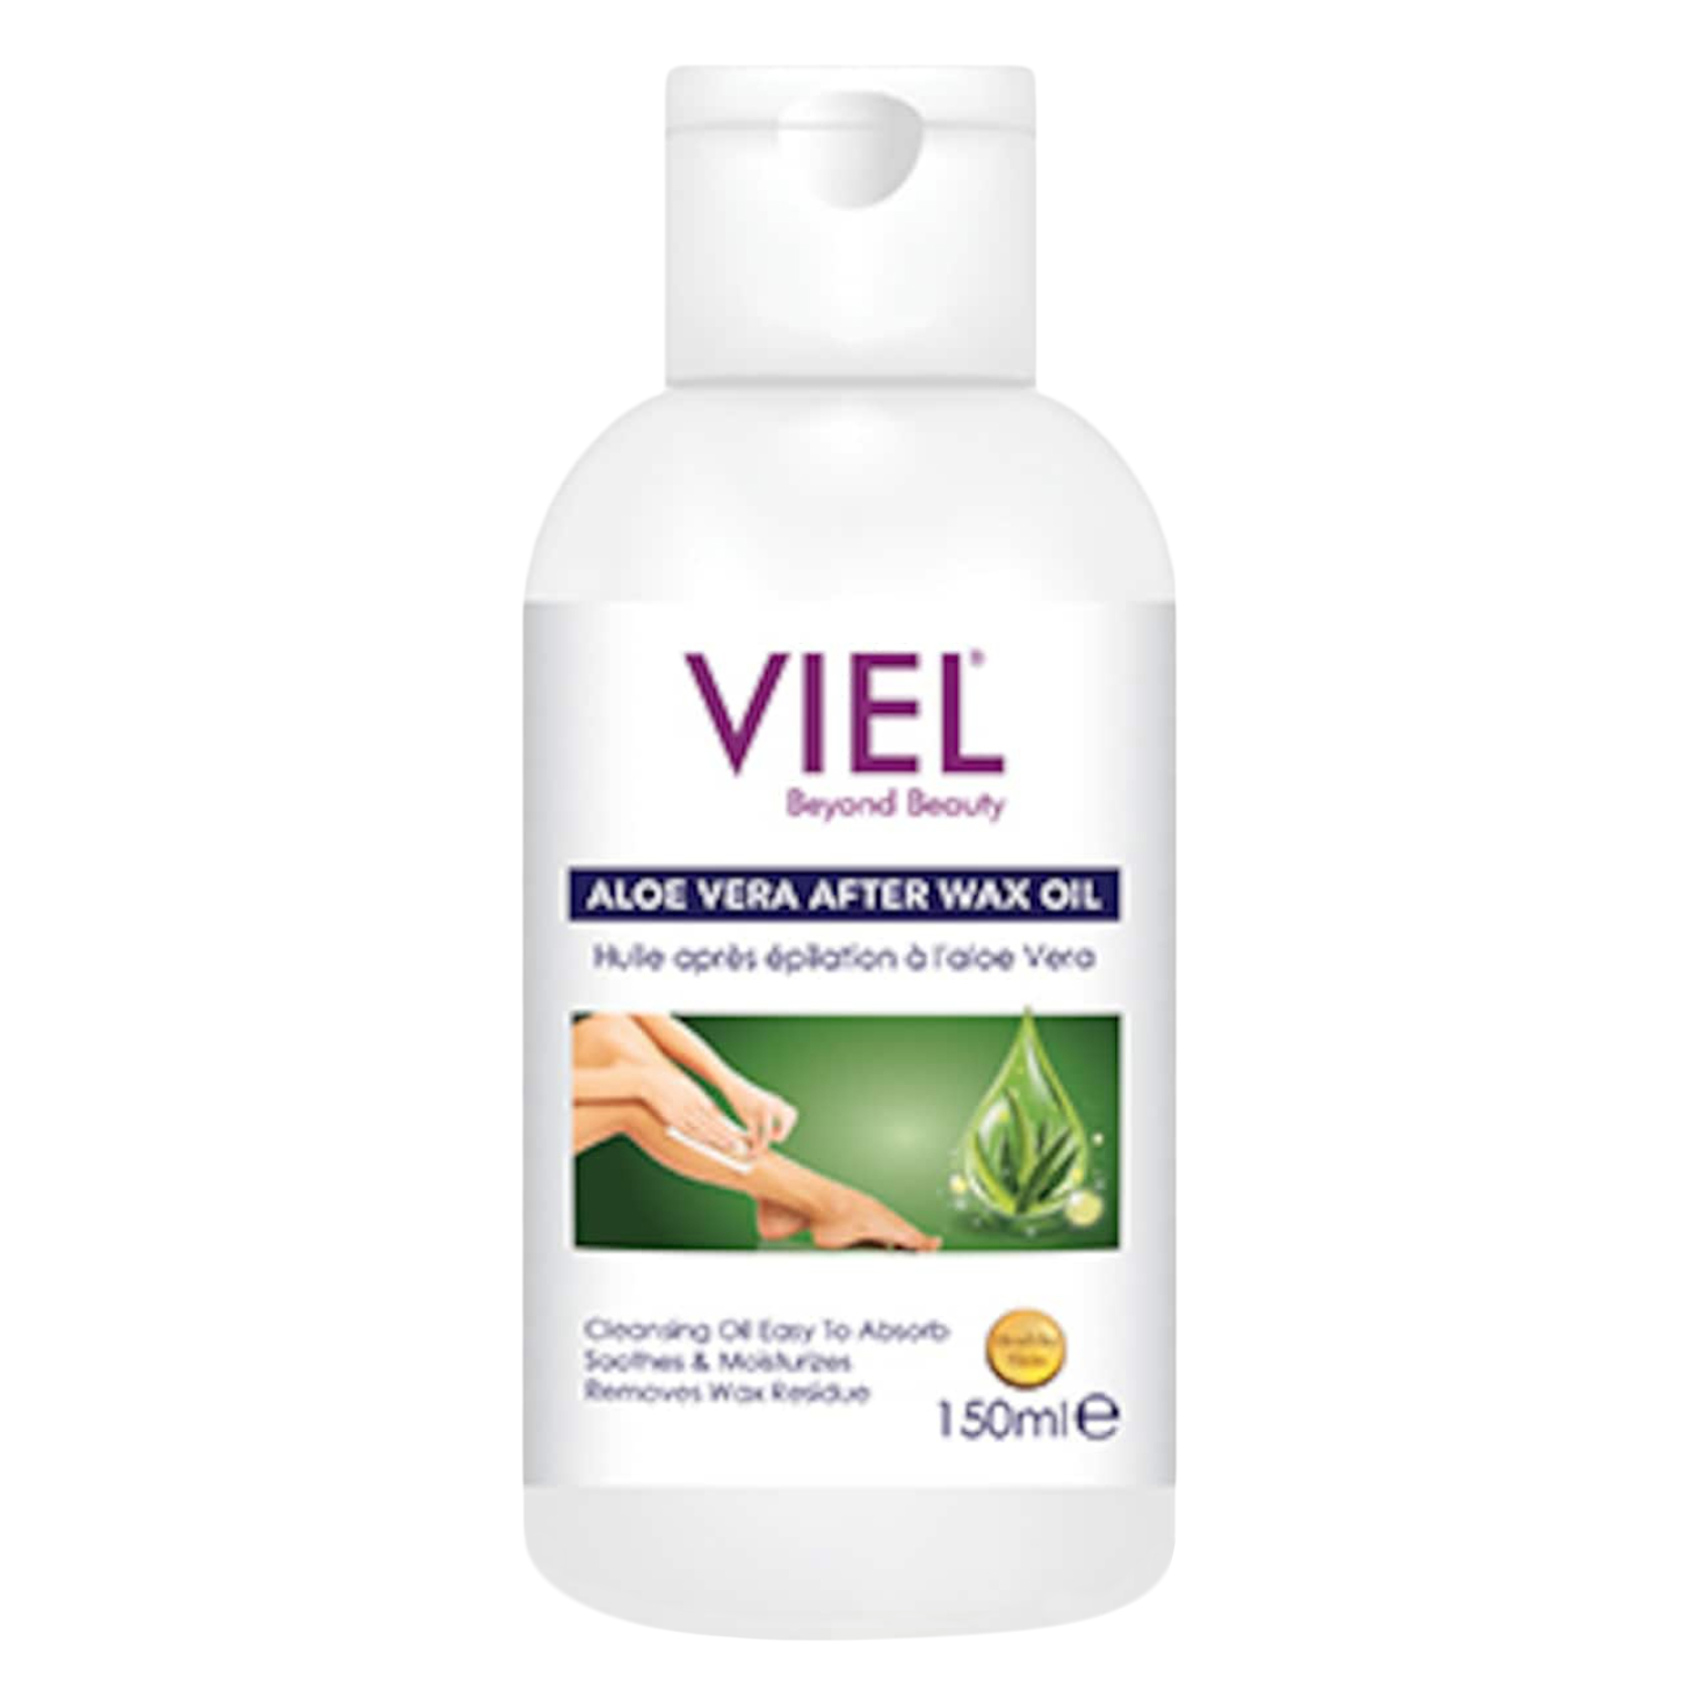 Viel Beyond Beauty Aloe Vera After Wax Oil 150ml